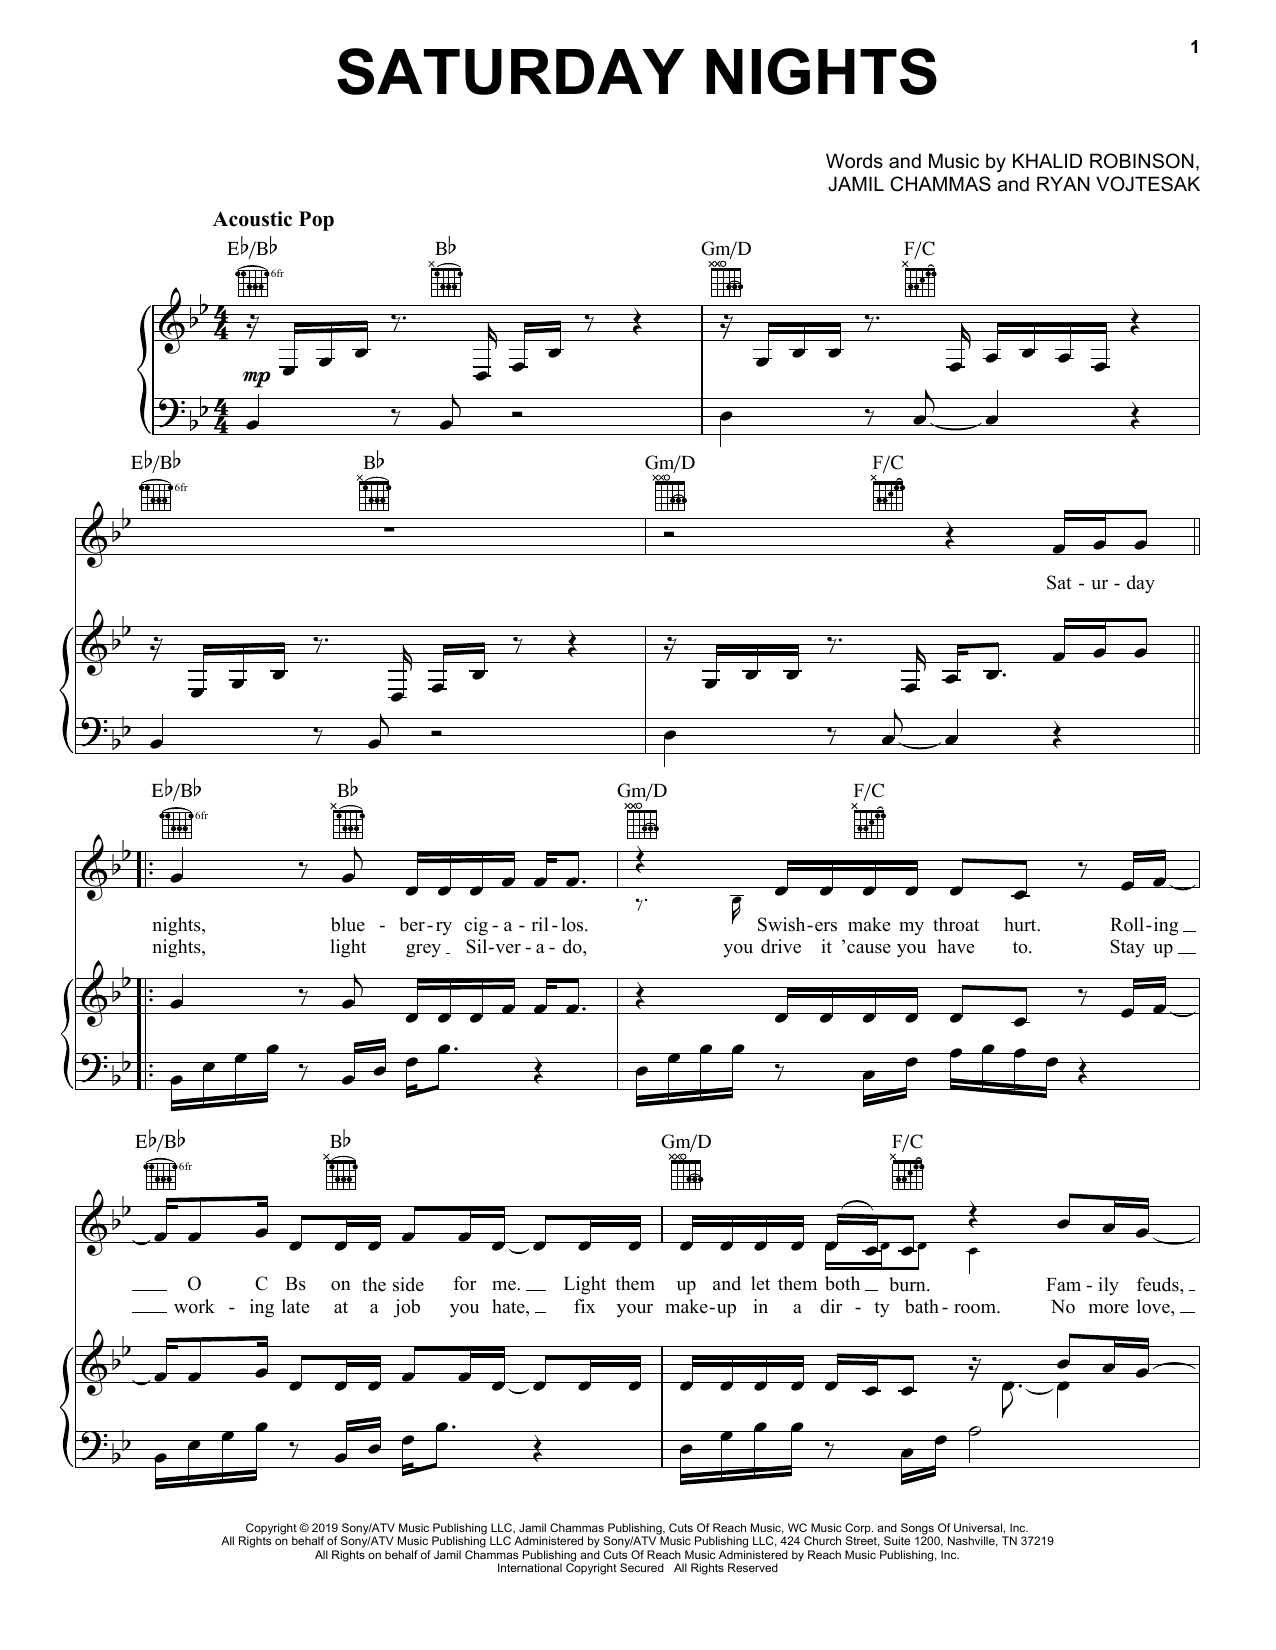 Khalid Saturday Nights Sheet Music Notes & Chords for Piano, Vocal & Guitar (Right-Hand Melody) - Download or Print PDF